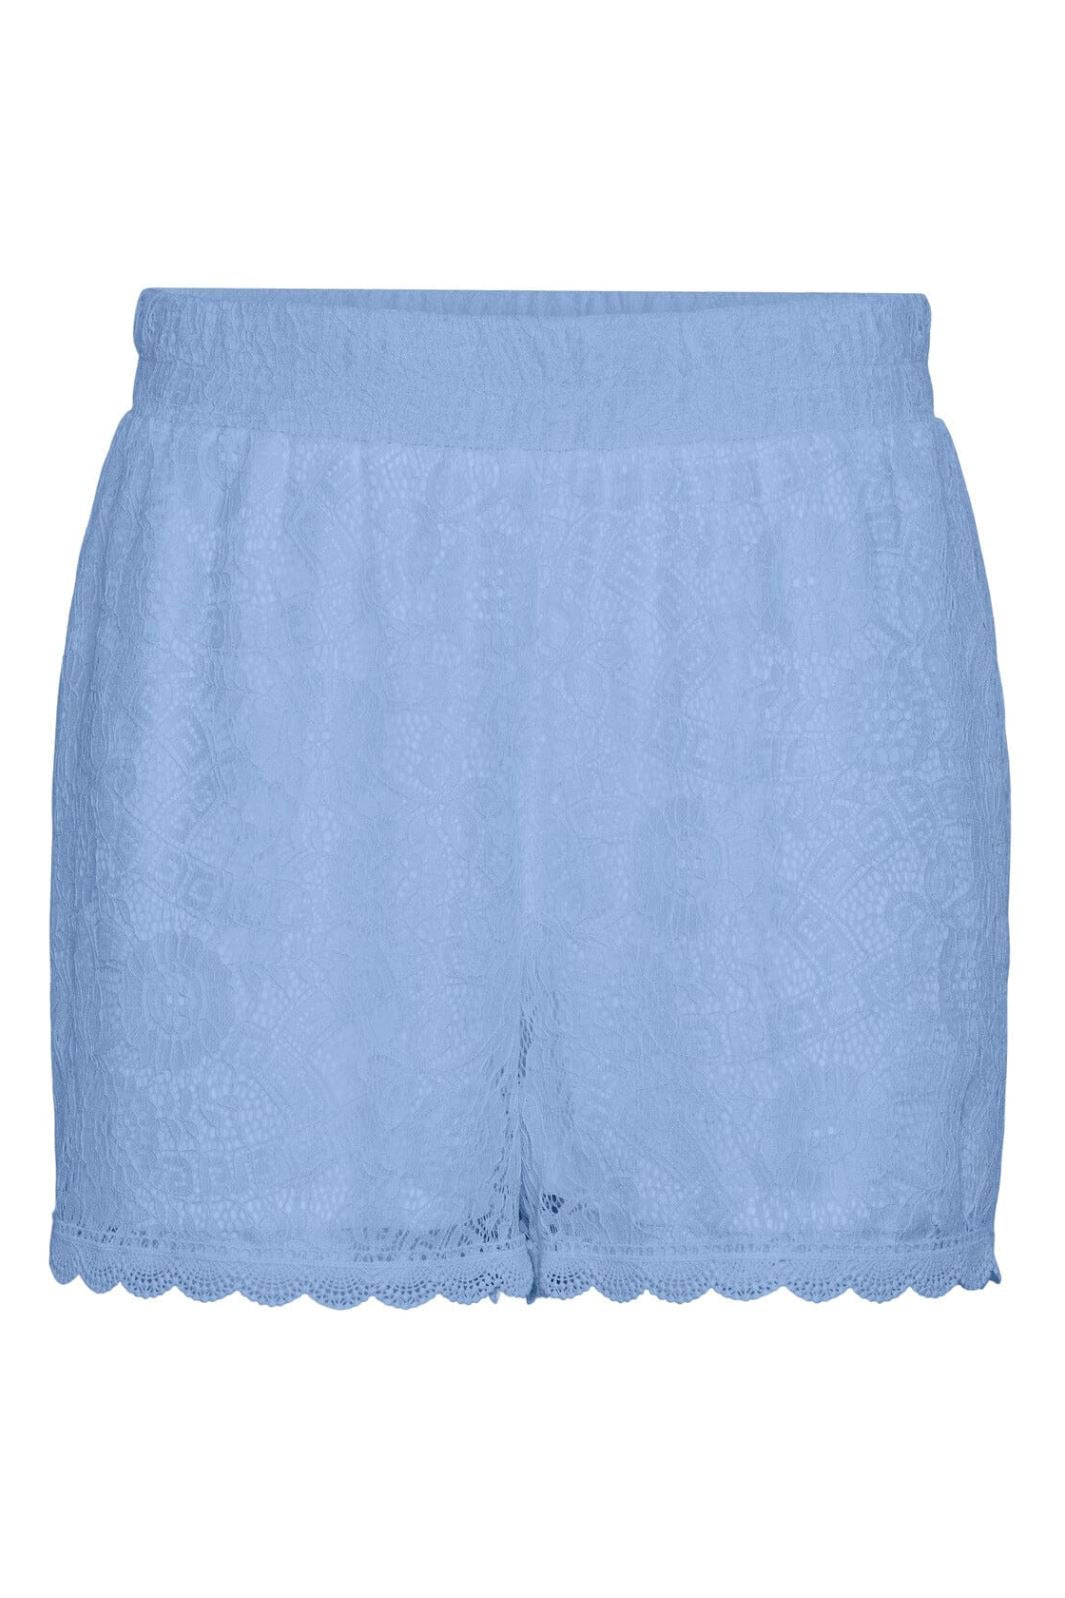 Pieces - Pcolline Shorts - 4474965 Hydrangea Shorts 